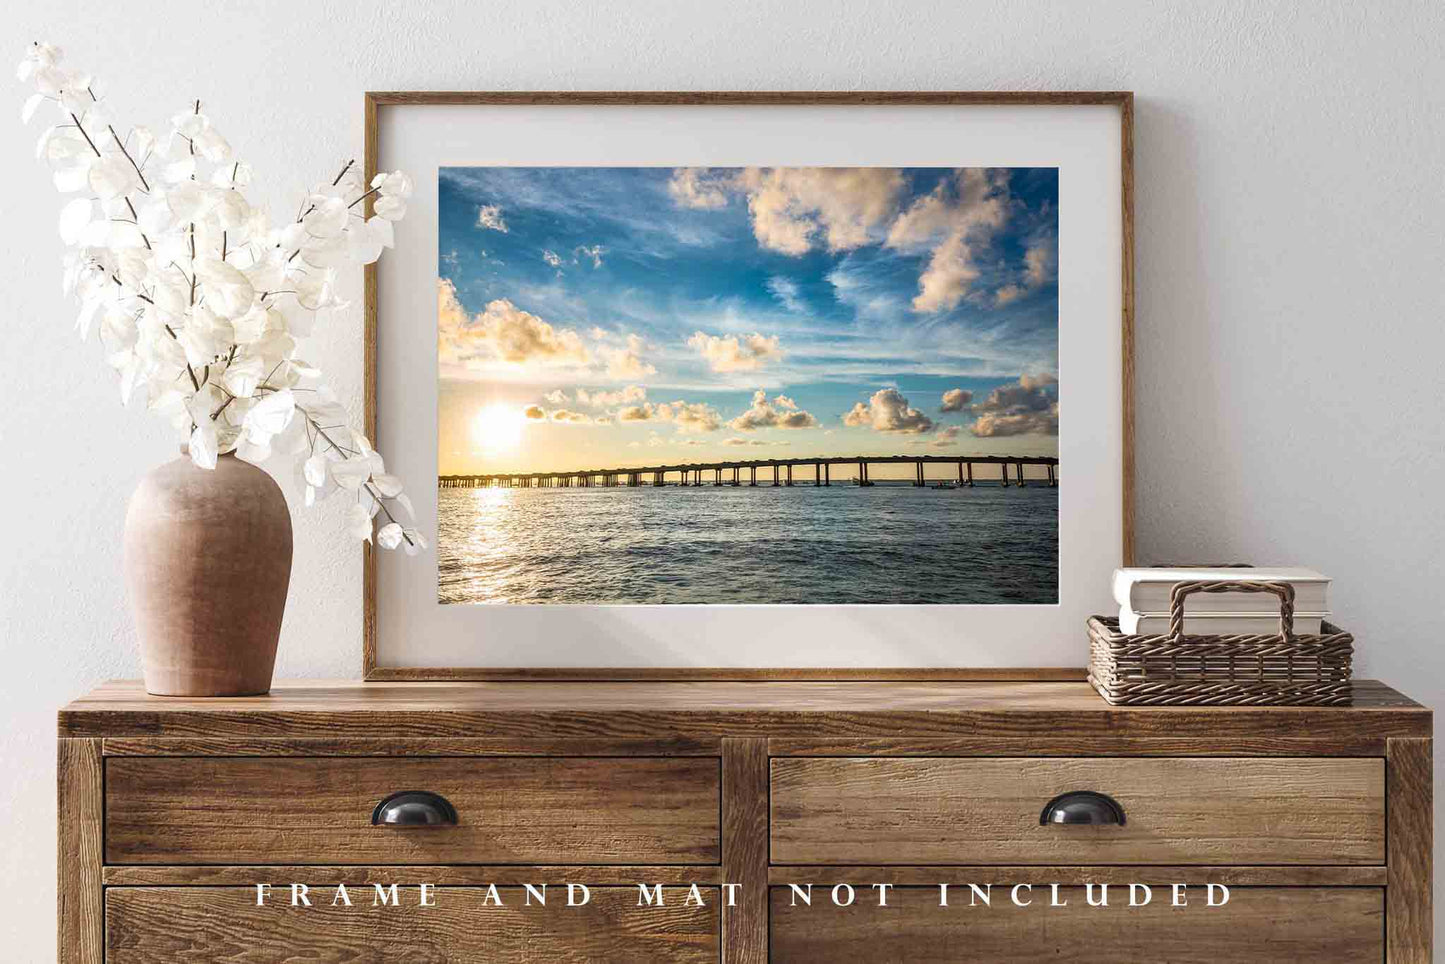 Coastal Photography Print (Not Framed) Picture of Destin Bridge at Sunset in Florida Seascape Wall Art Gulf Coast Decor